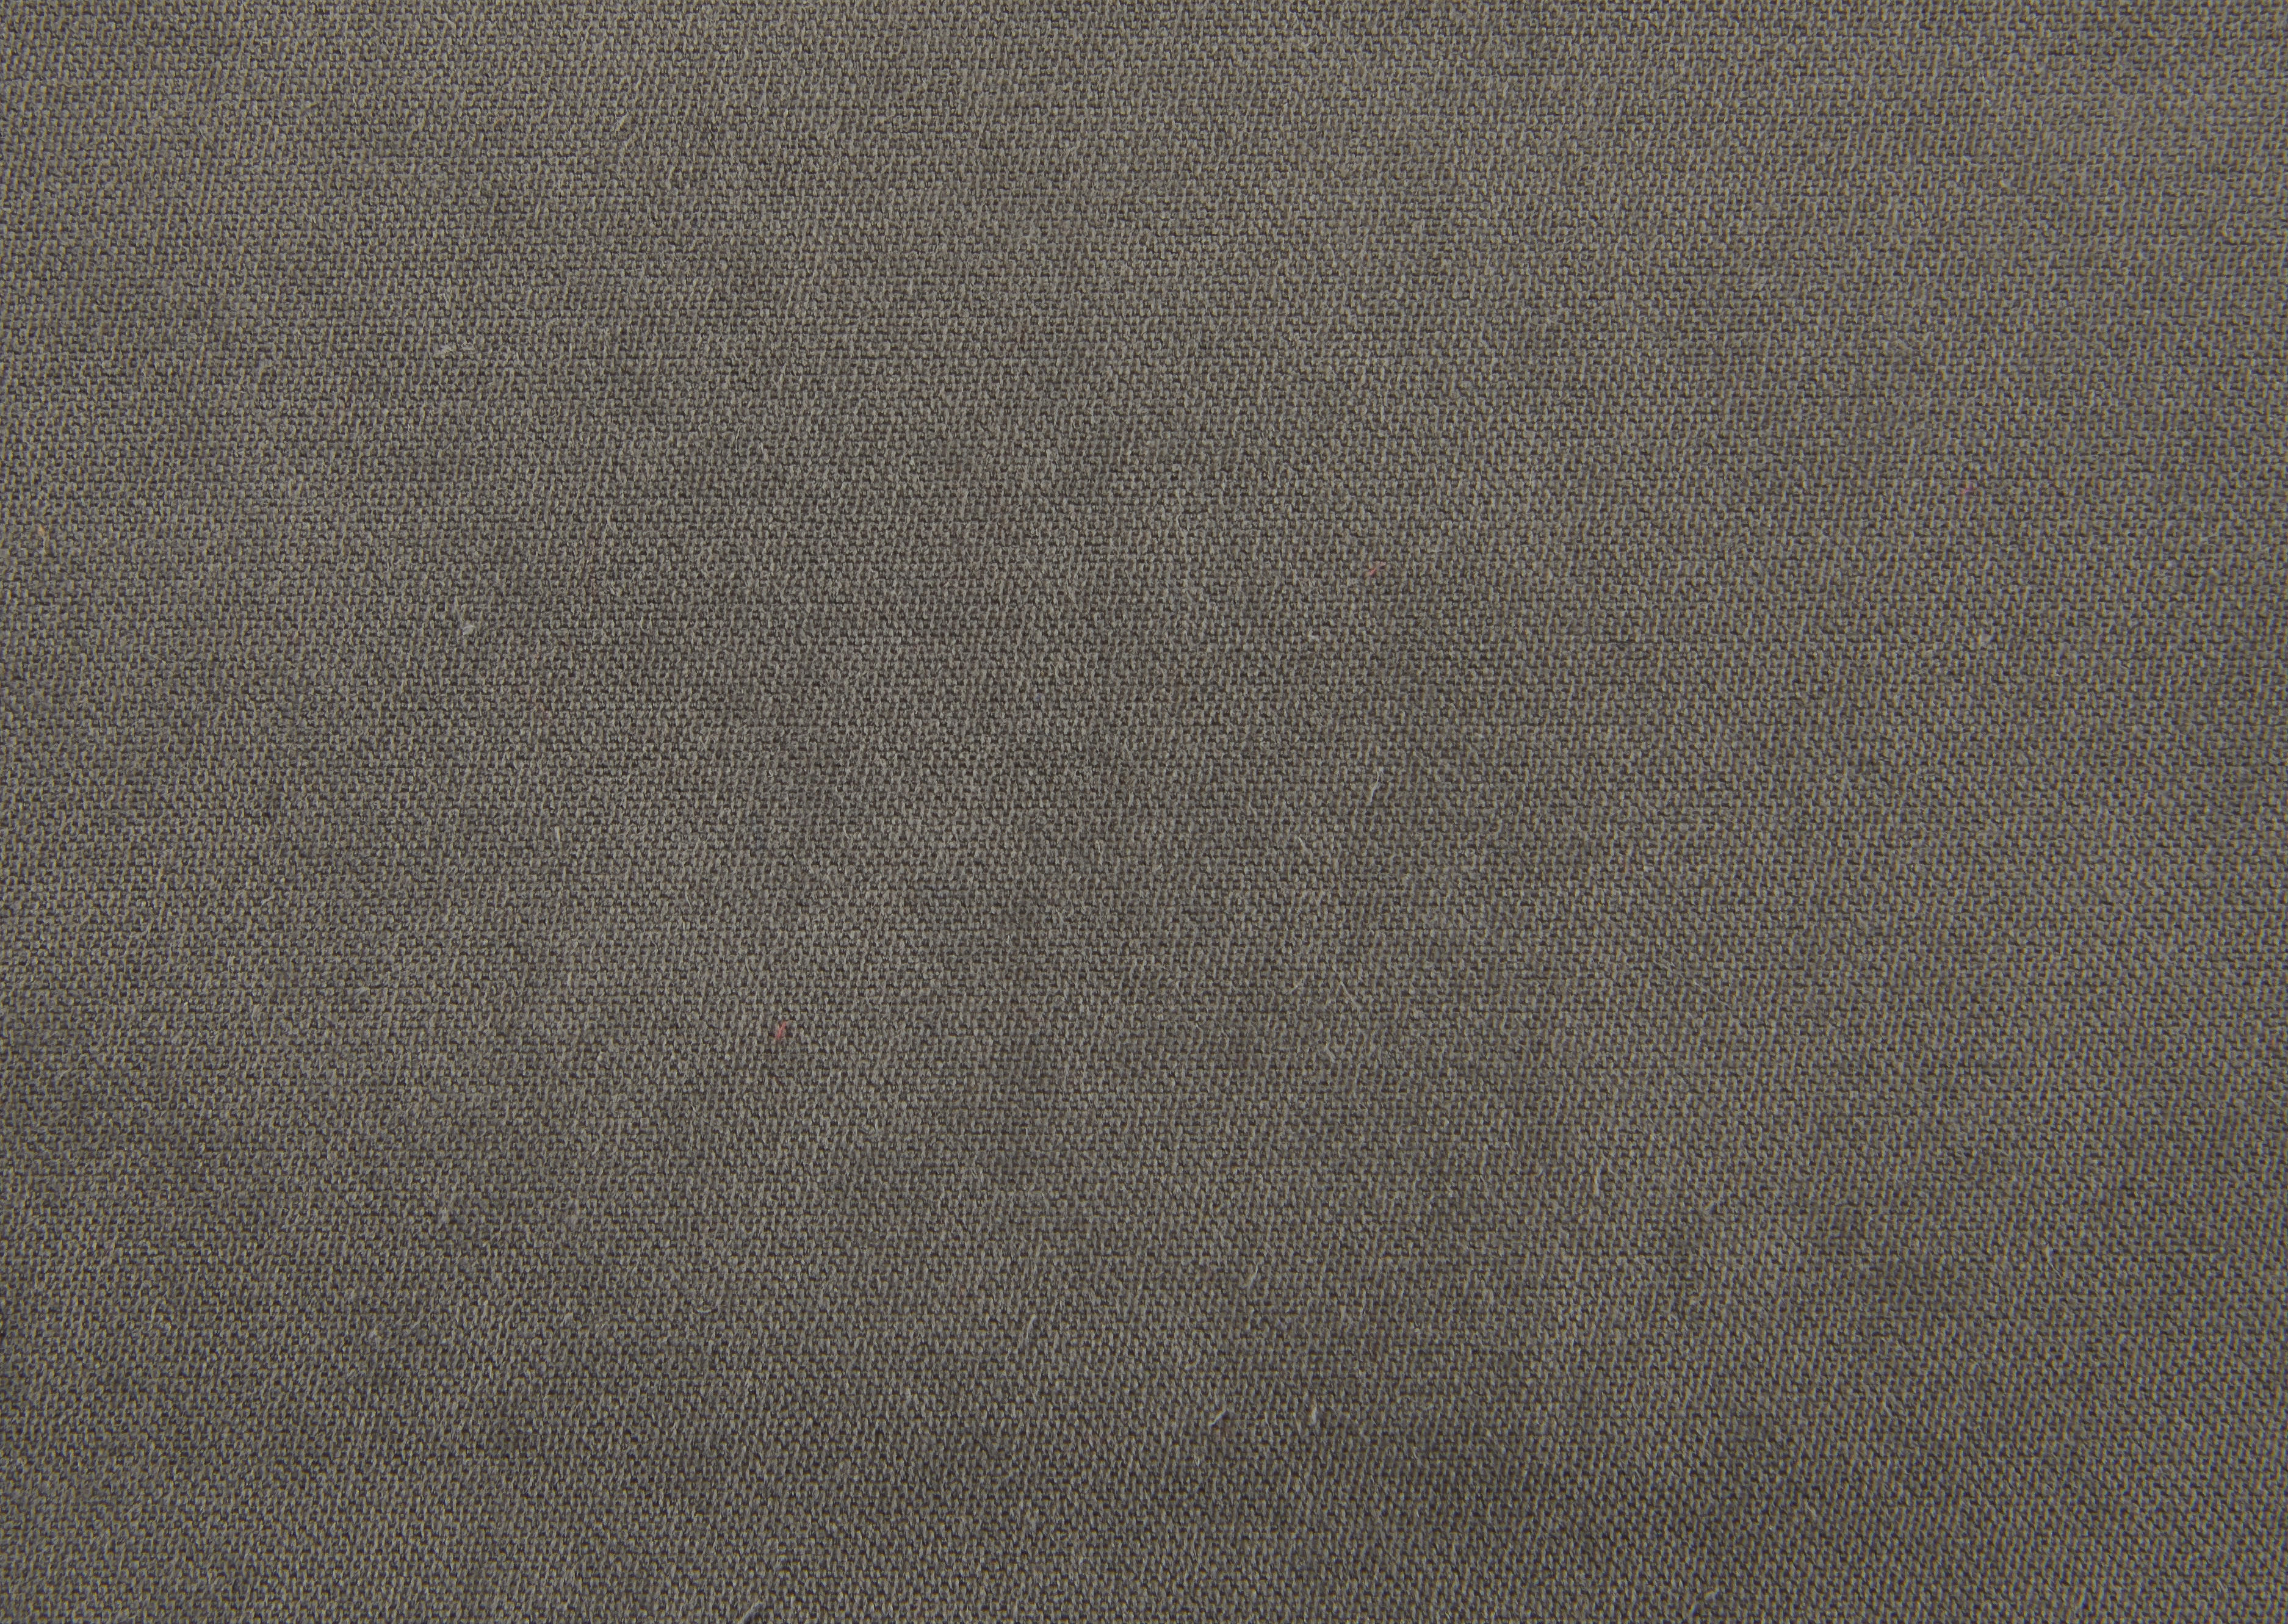 Hocker Ginger grau anthrazit B/H/T: ca. 108x45x76 cm Ginger - schwarz/graubraun (108,00/45,00/76,00cm)